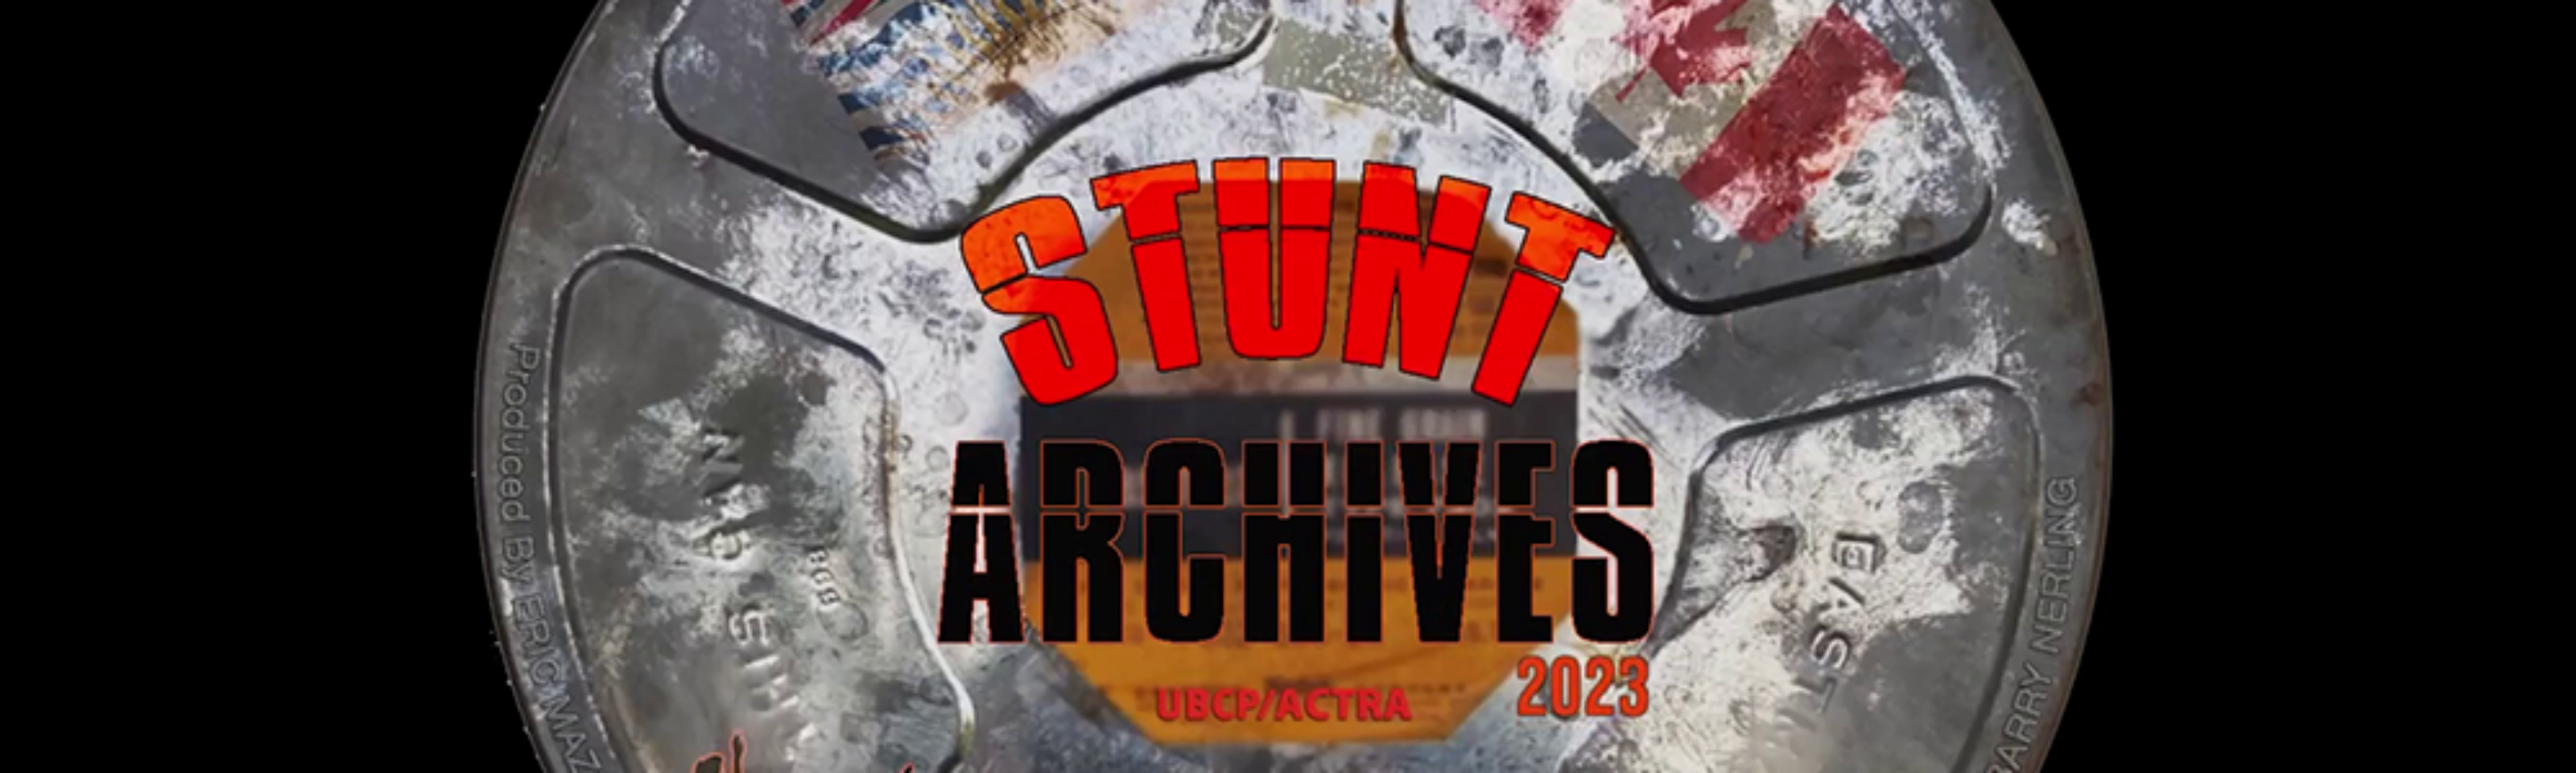 stunt archive 